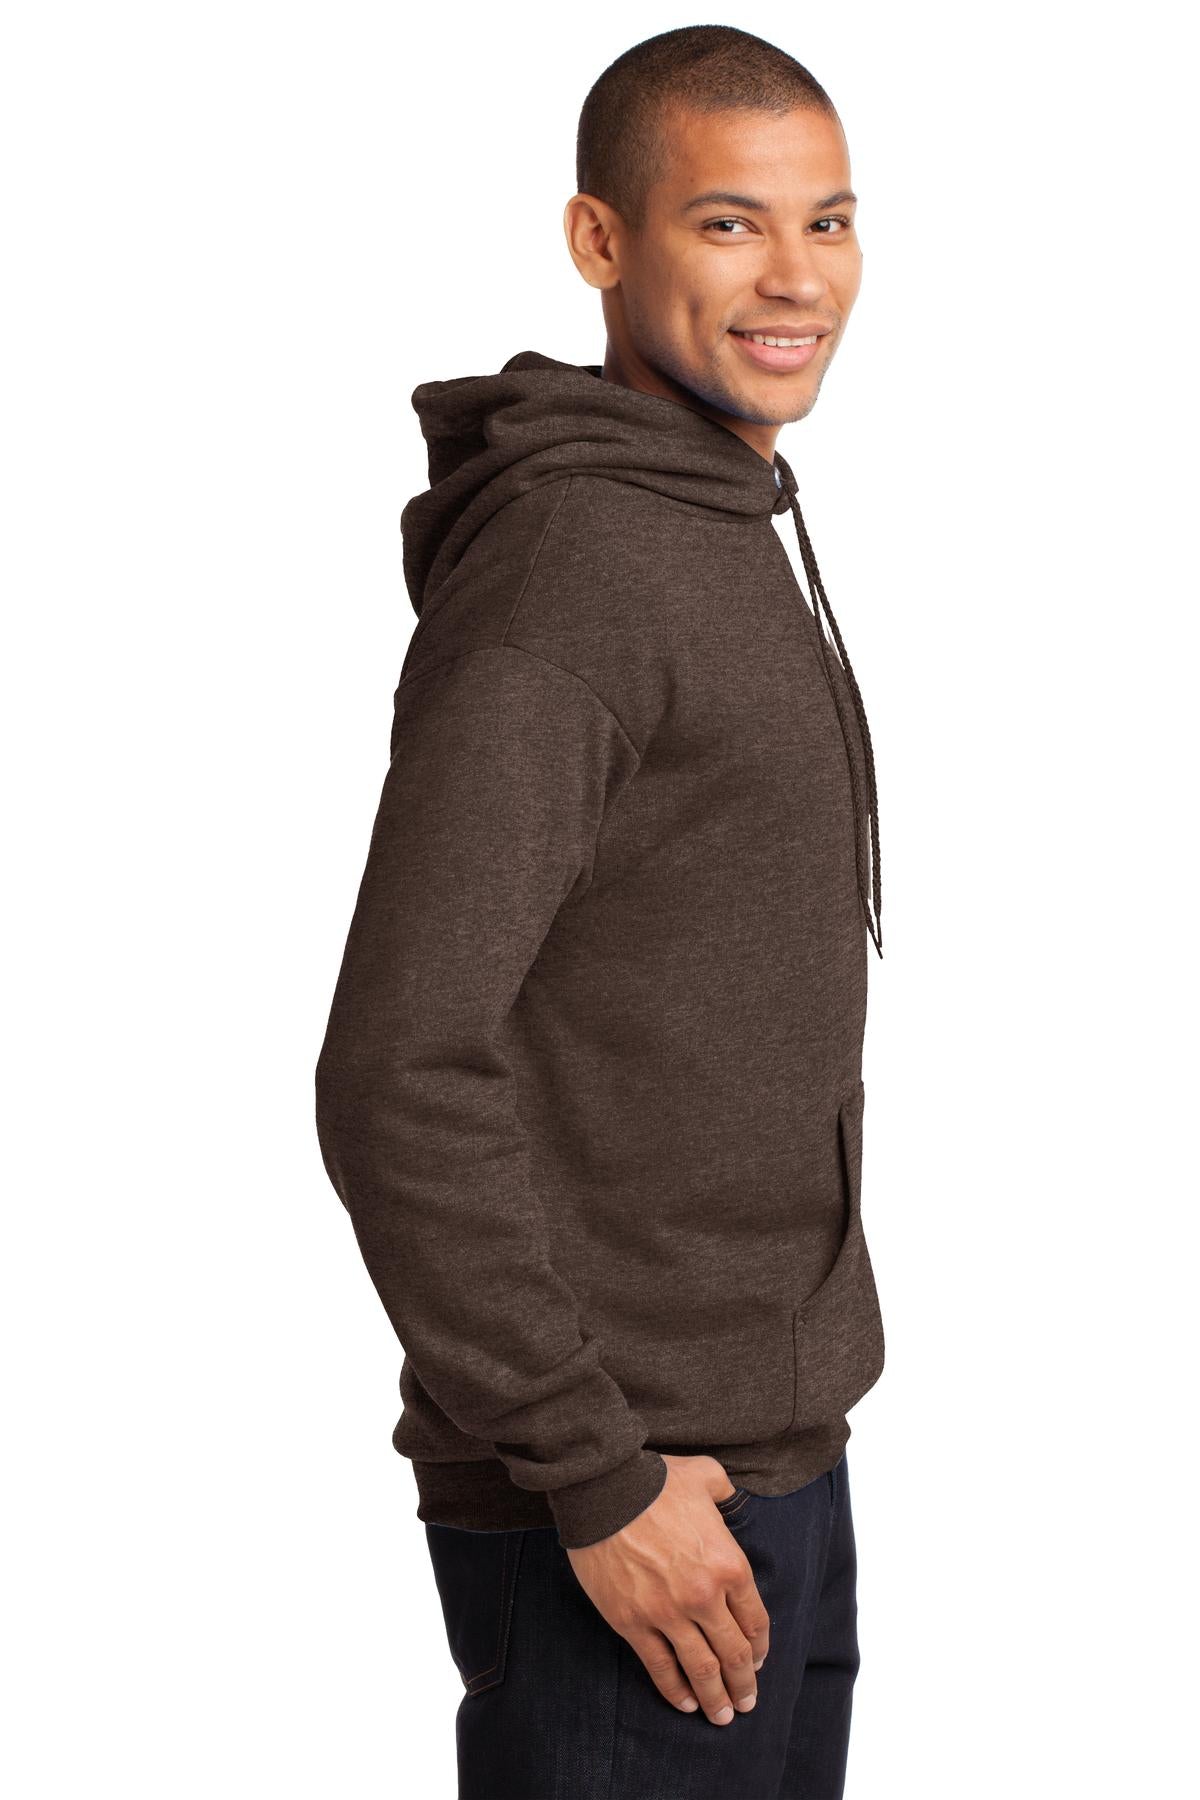 Port & Company® - Core Fleece Pullover Hooded Sweatshirt. PC78H [Heather Dark Chocolate Brown] - DFW Impression